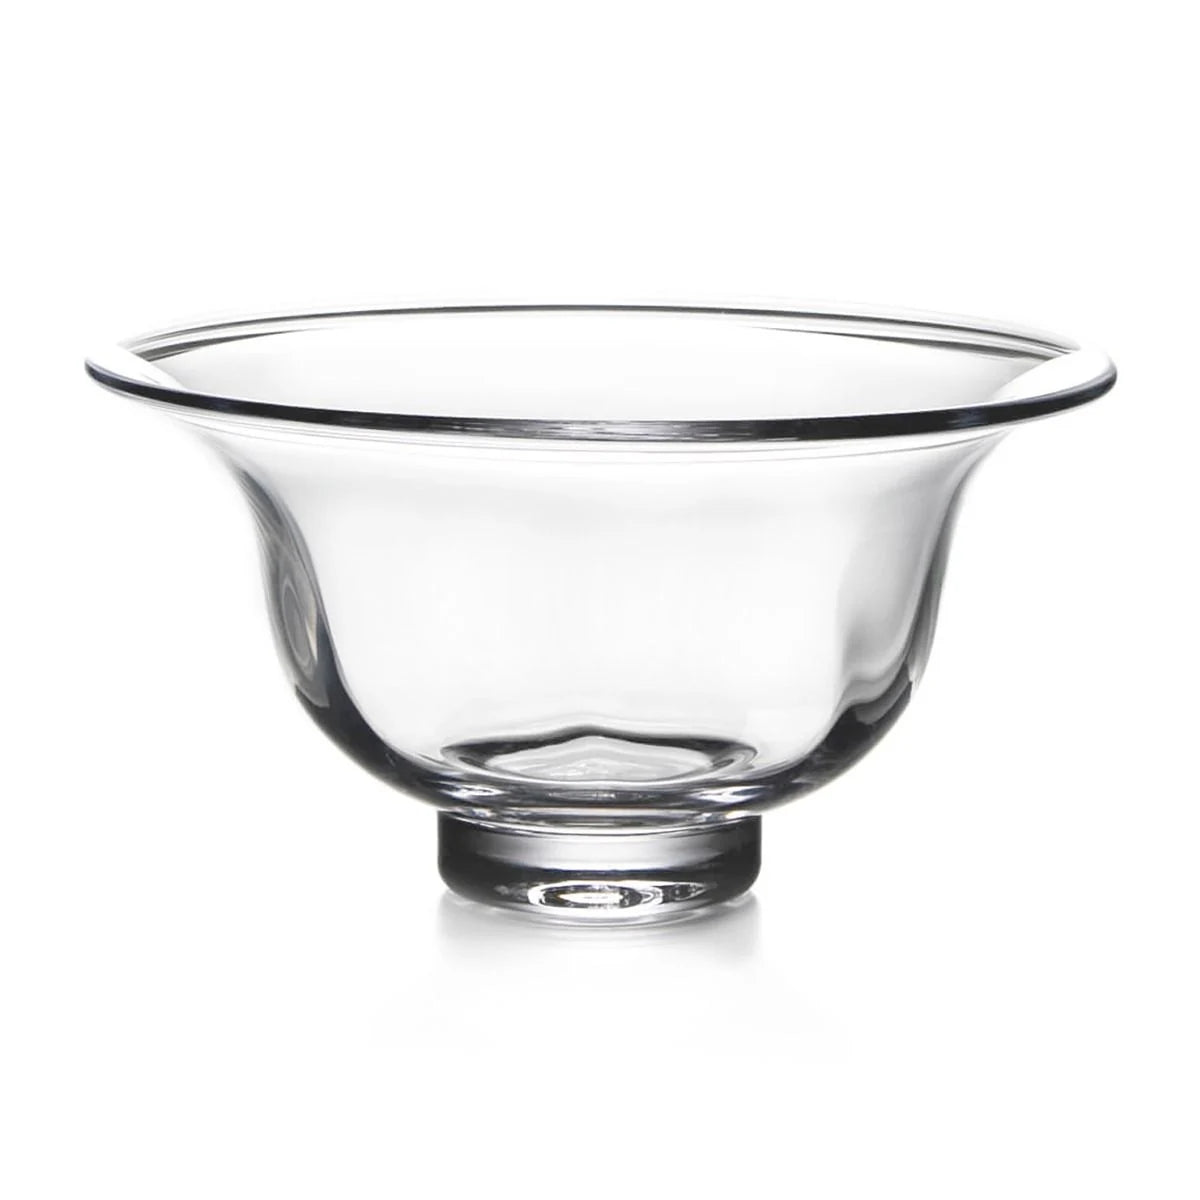 SIMON PEARCE BOWL GLASS SHELBURNE (Available in 2 Sizes)